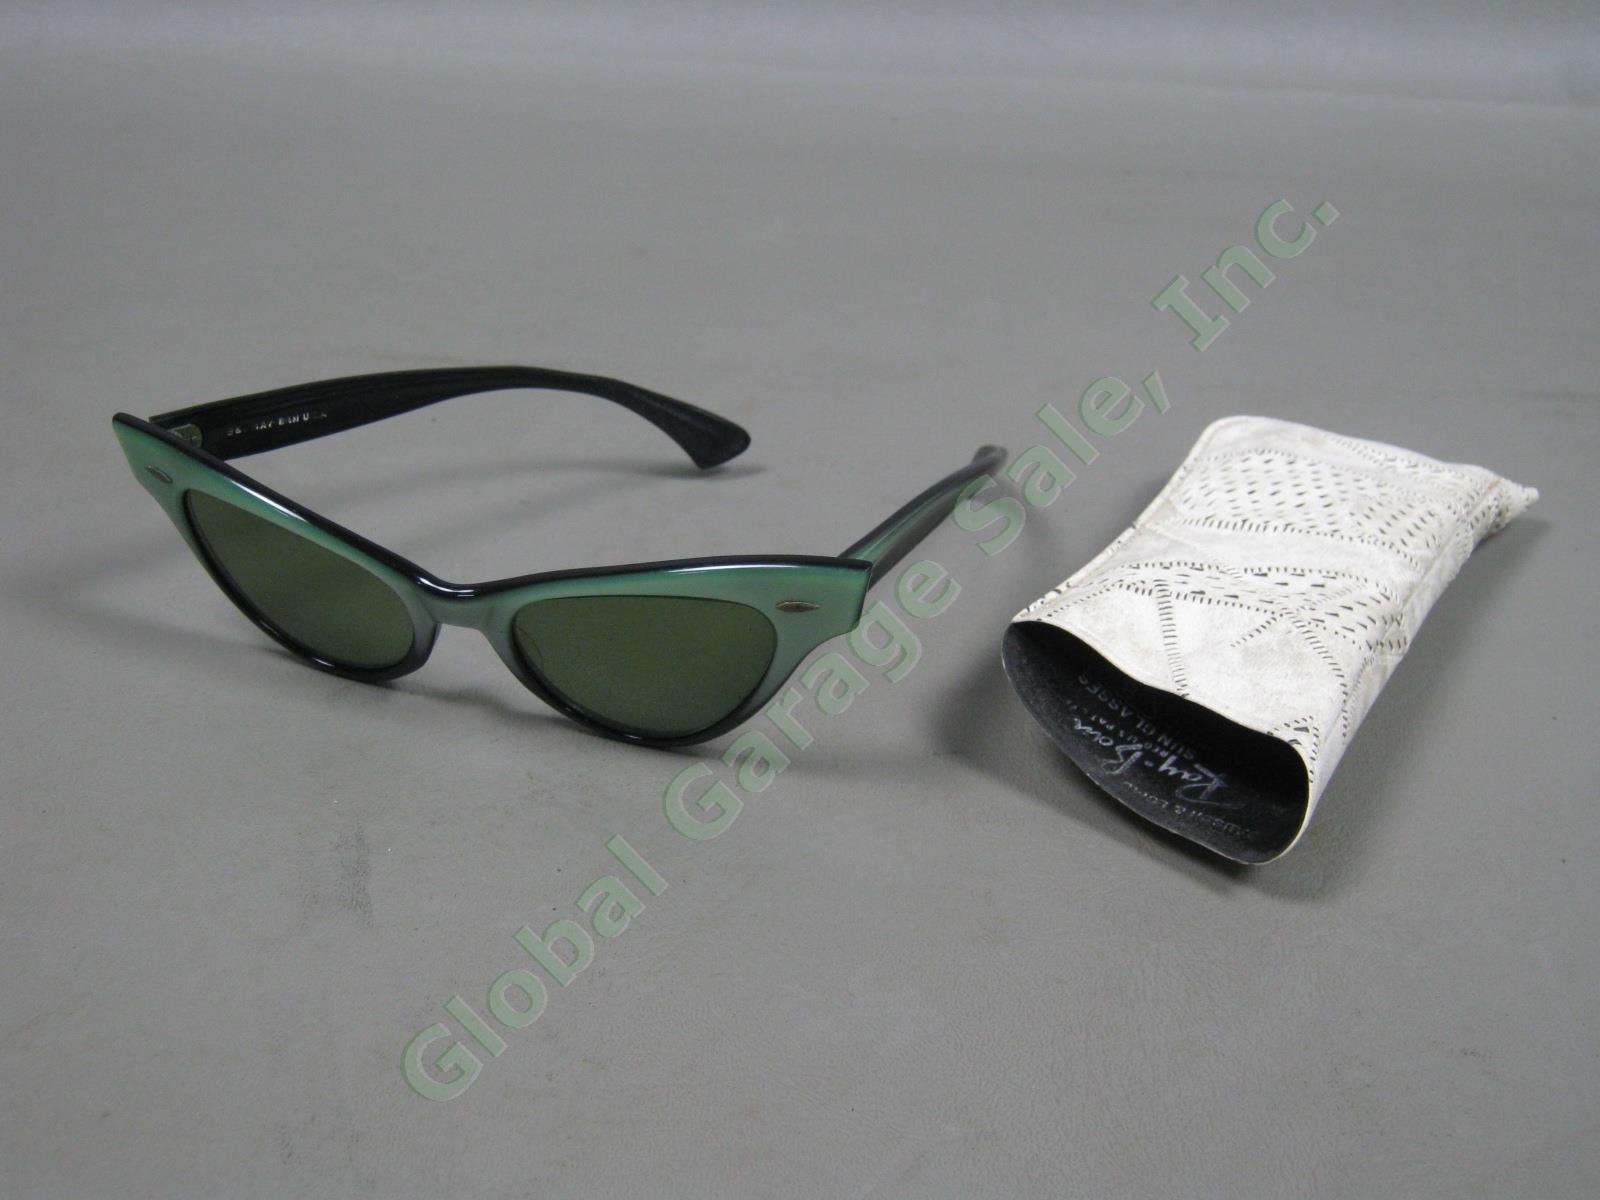 Vtg 50s? Bausch & Lomb B L Ray-Ban Cat Eye Sunglasses Emerald Green Pearlescent